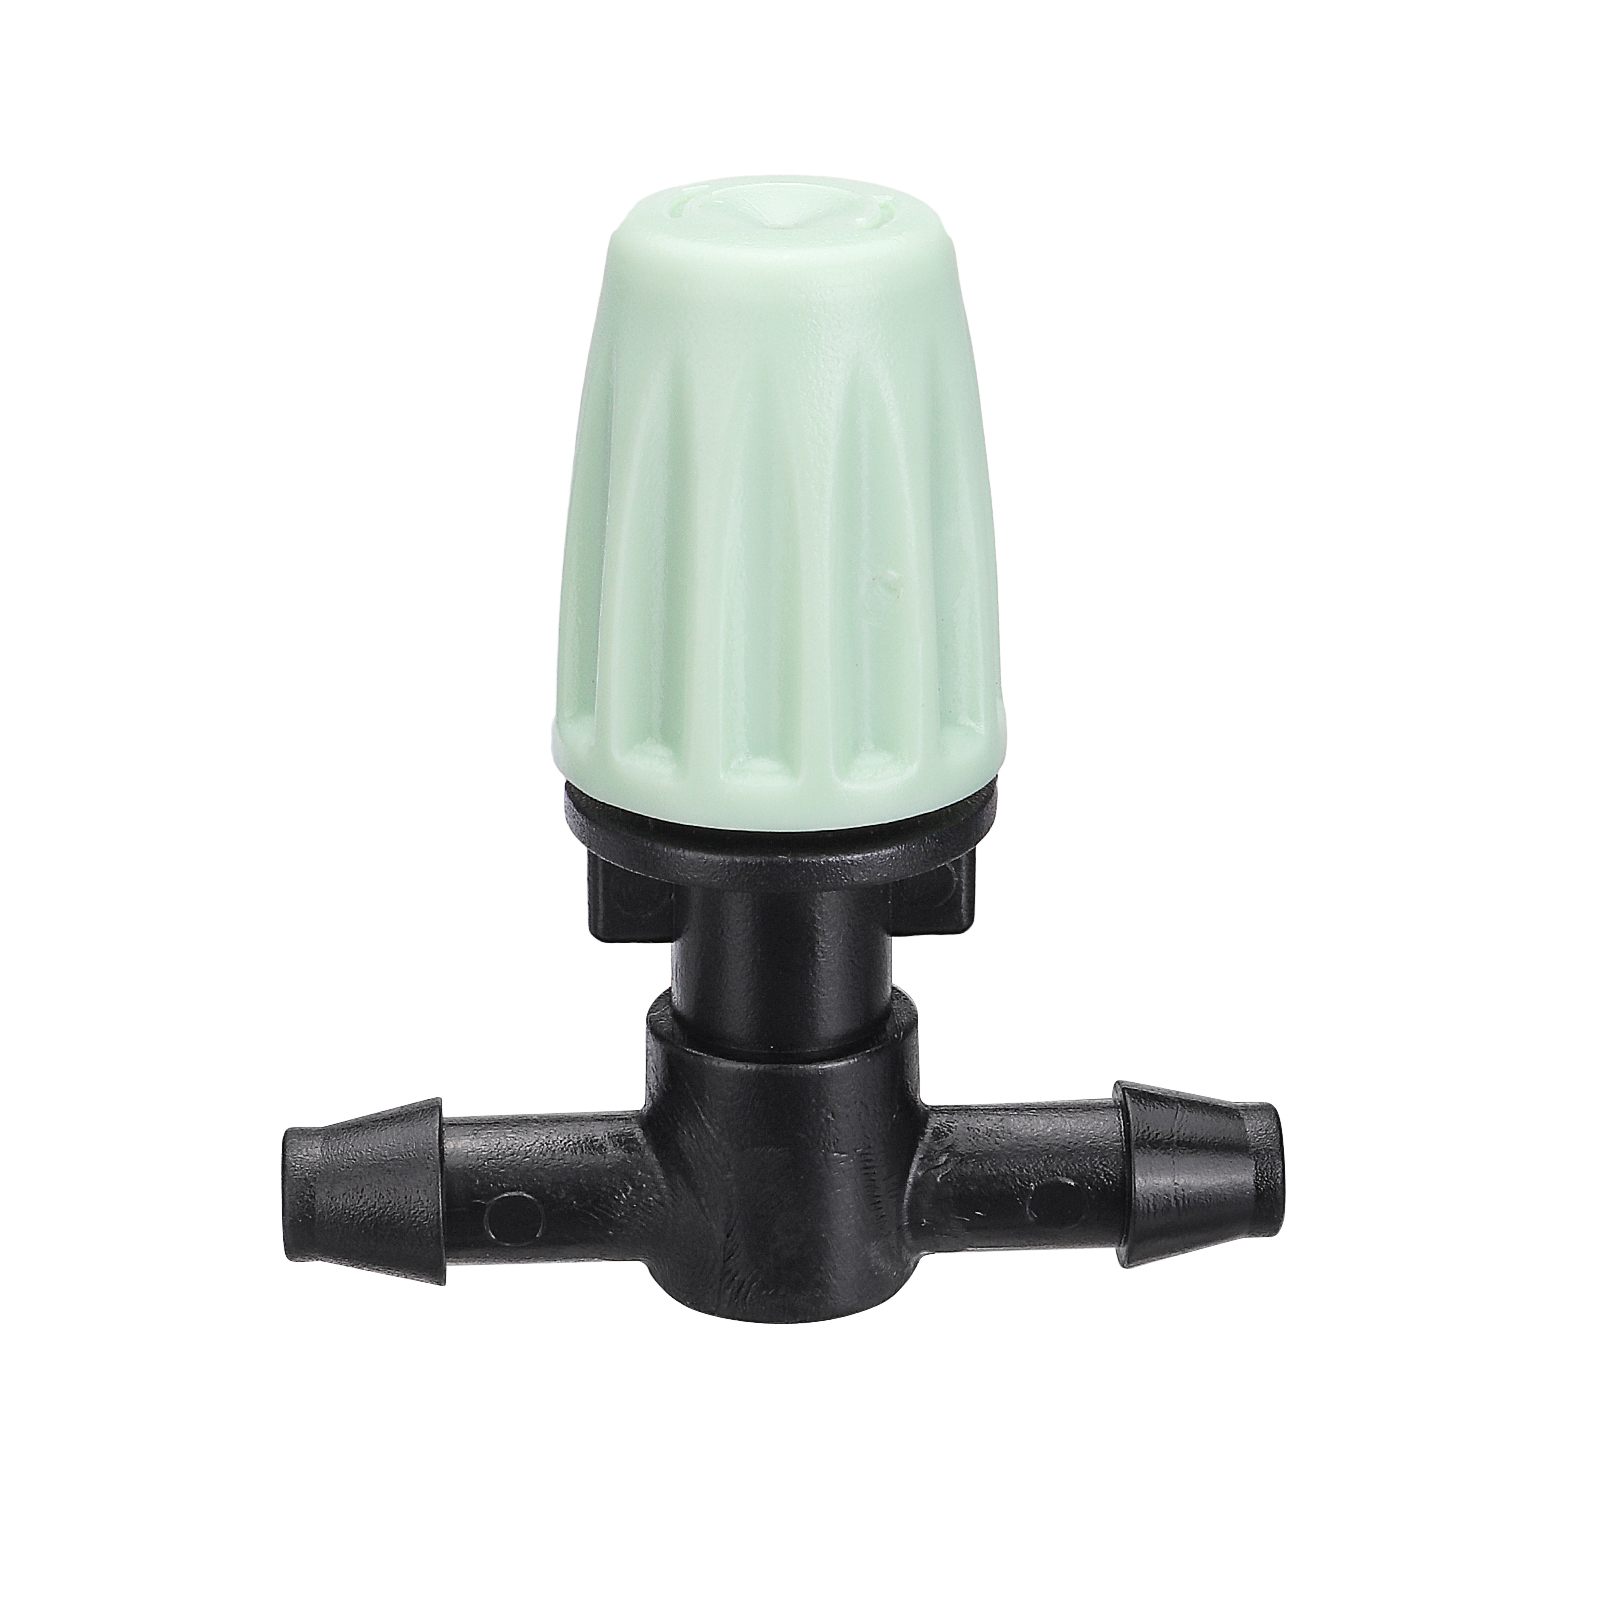 NASUM-402M-Automatic-Sprinkler-DIY-Garden-Watering-Micro-Drip-Irrigation-System-Hose-Kits-1891179-28